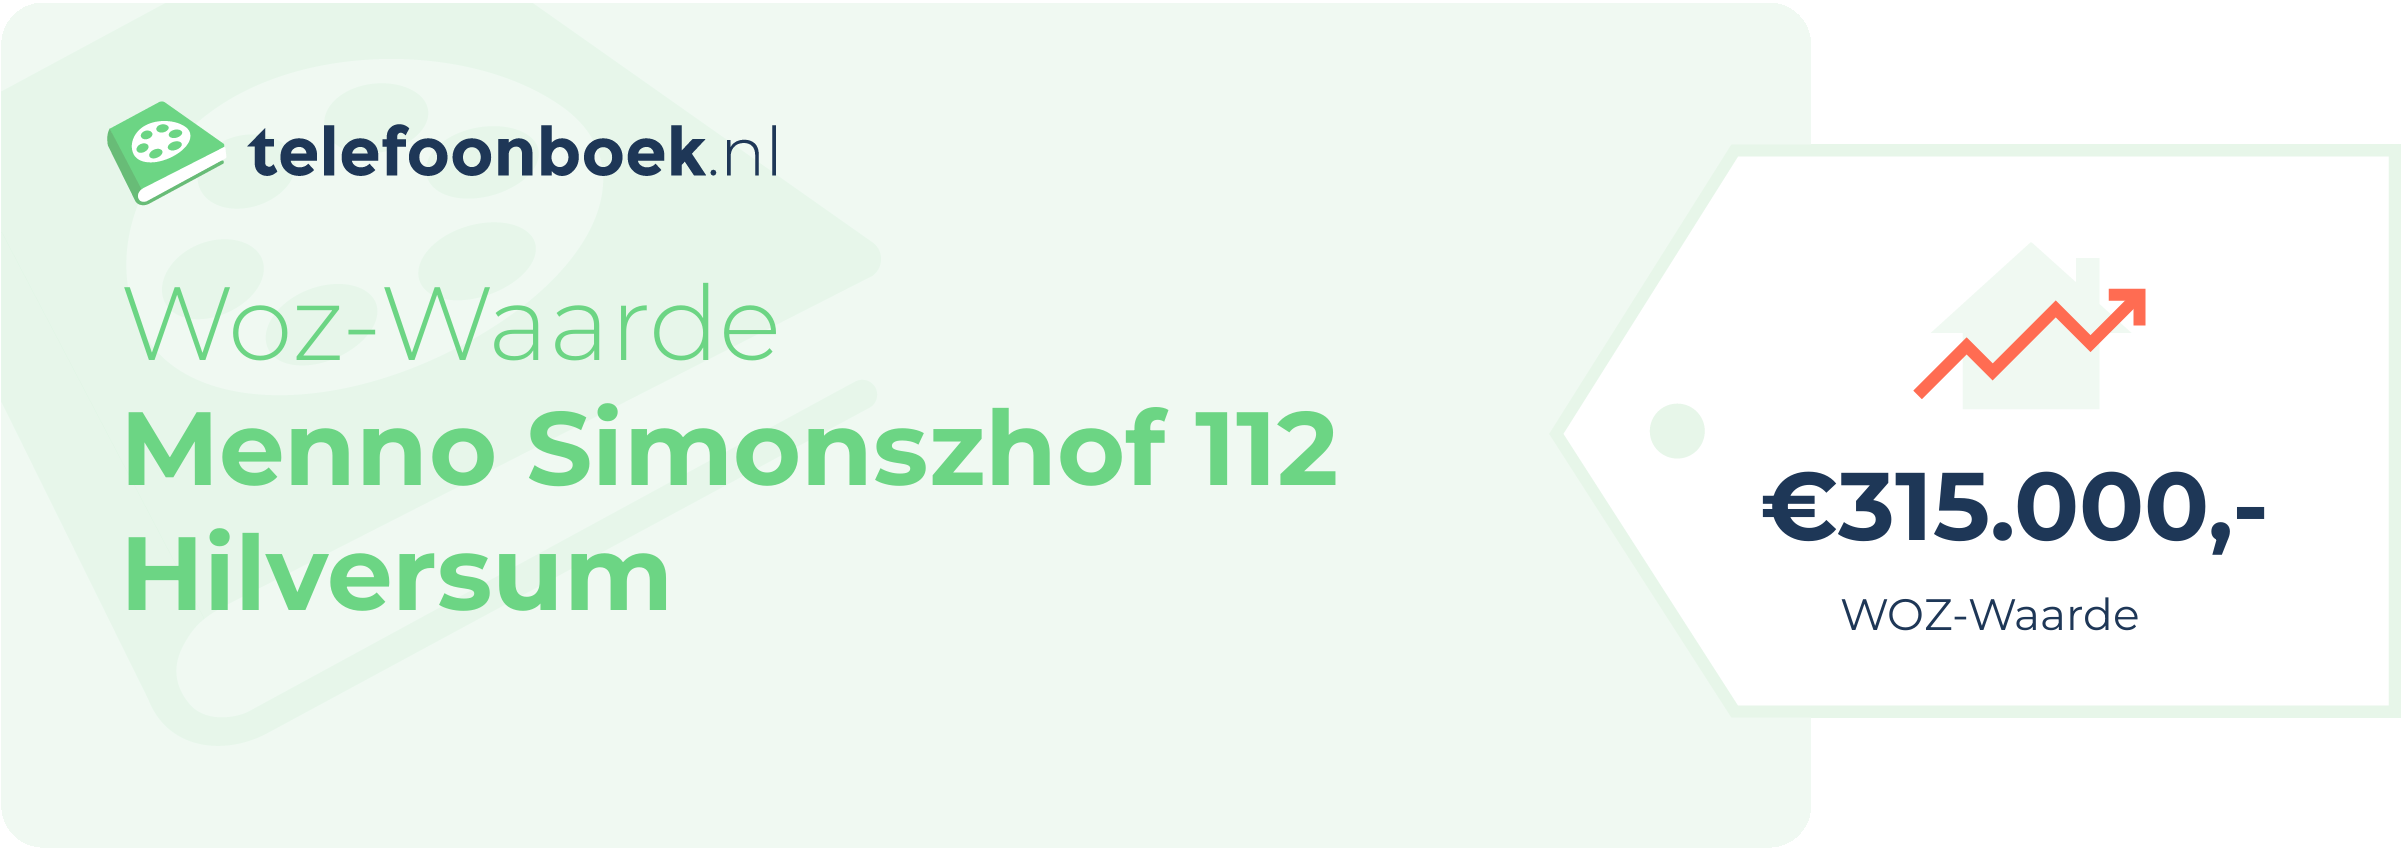 WOZ-waarde Menno Simonszhof 112 Hilversum